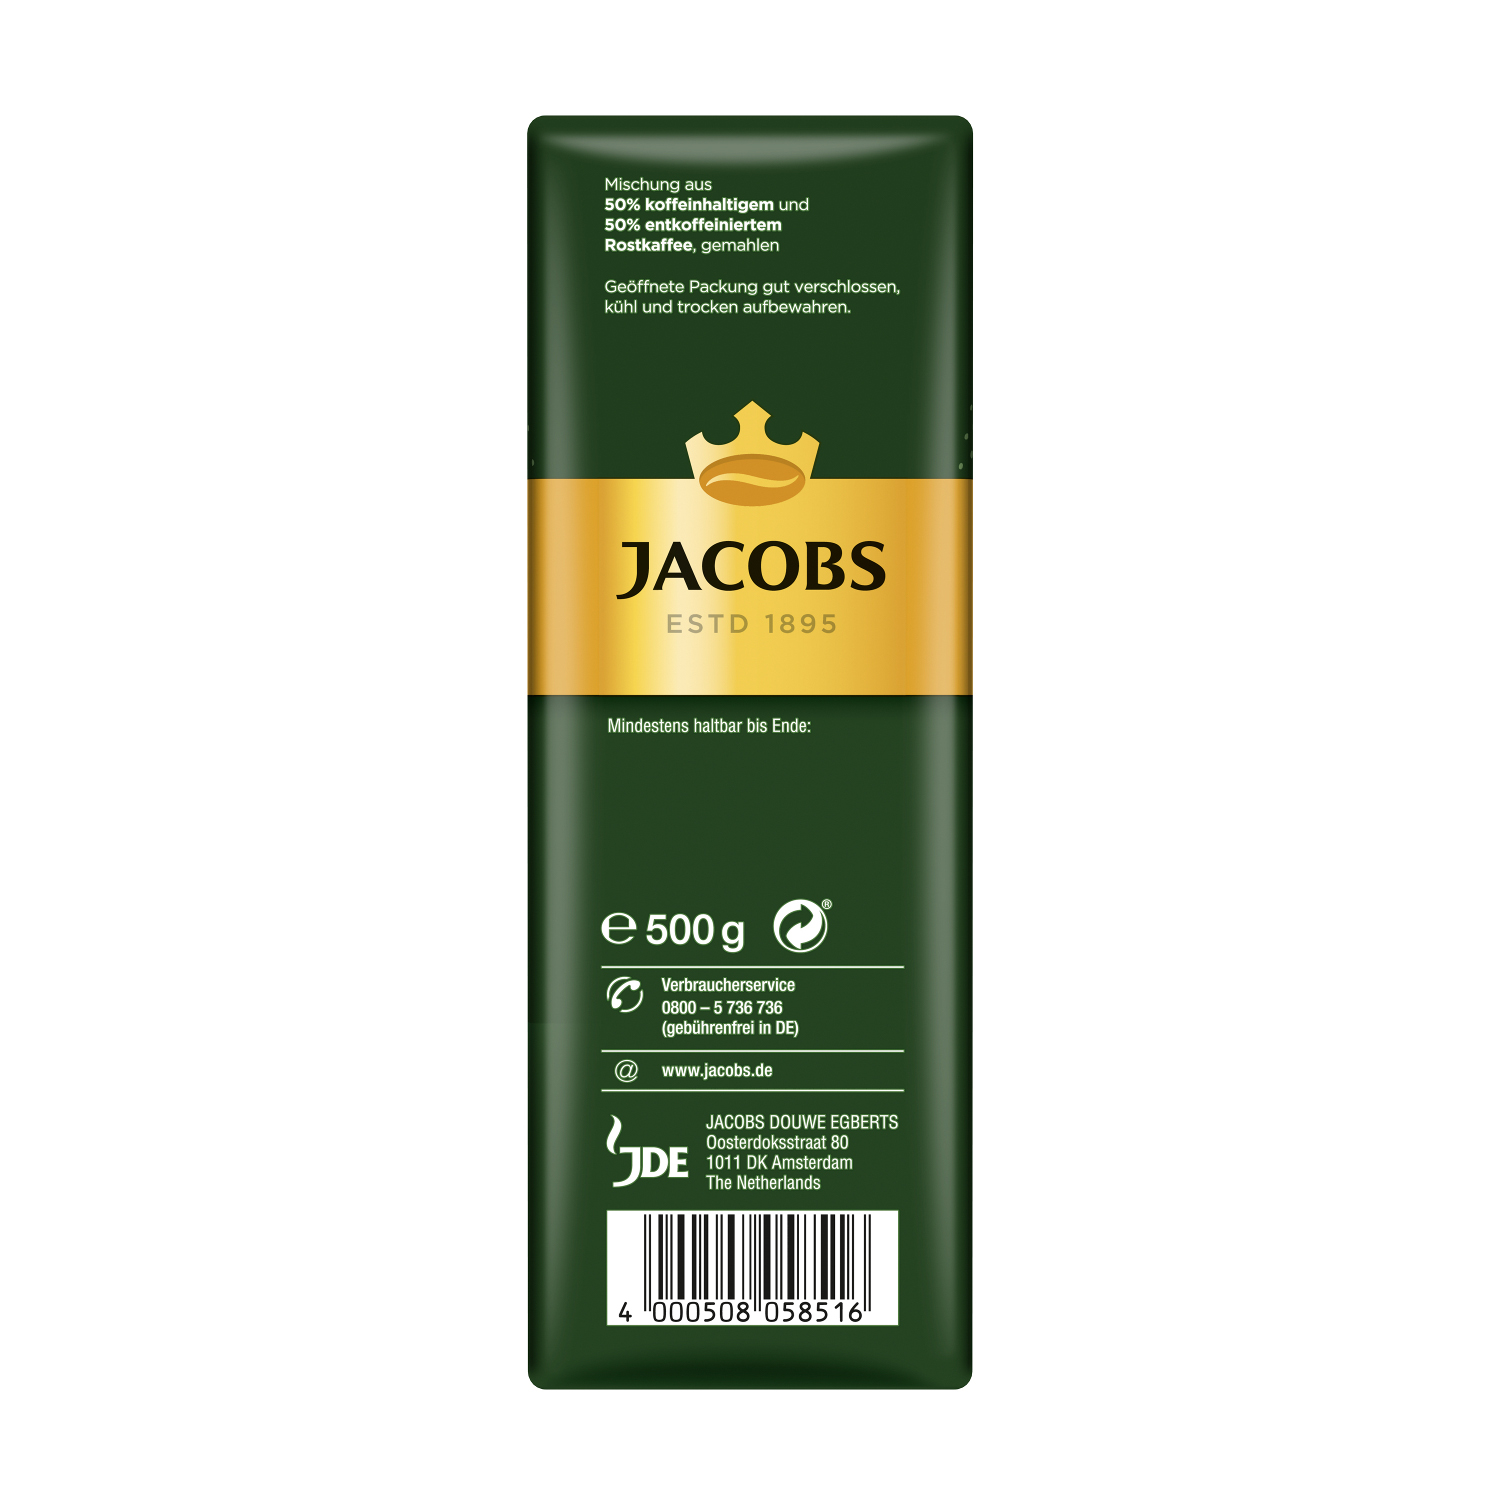 500 g gemahlener JACOBS (Filter-Kaffeemaschine) Krönung Röstkaffee 12 Balance x Filterkaffee